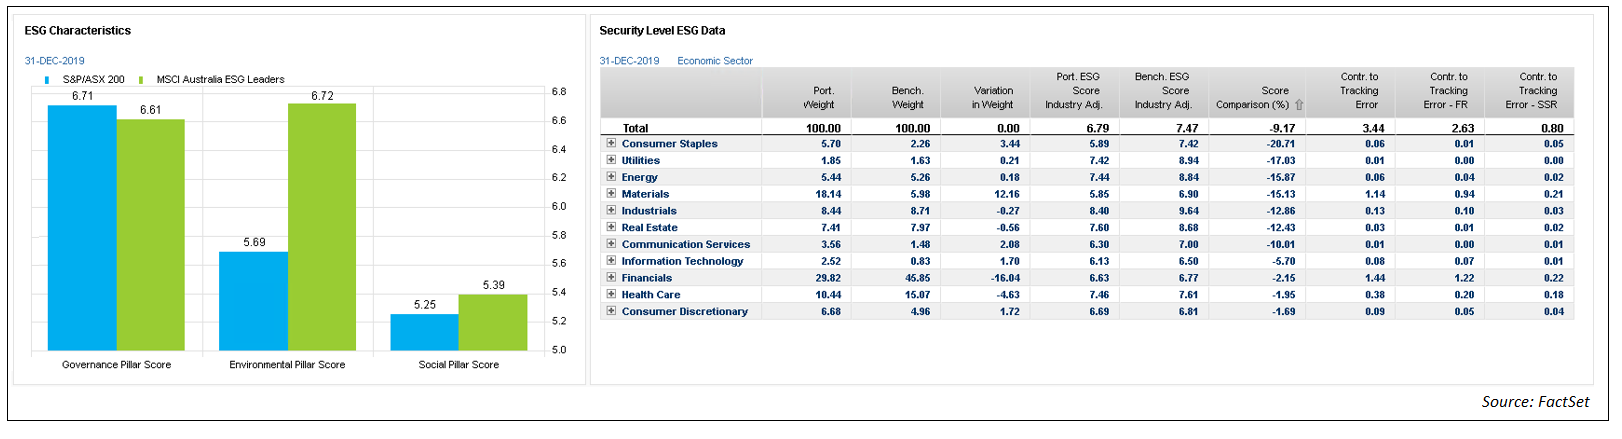 Index vs benchmark ESG score comparison